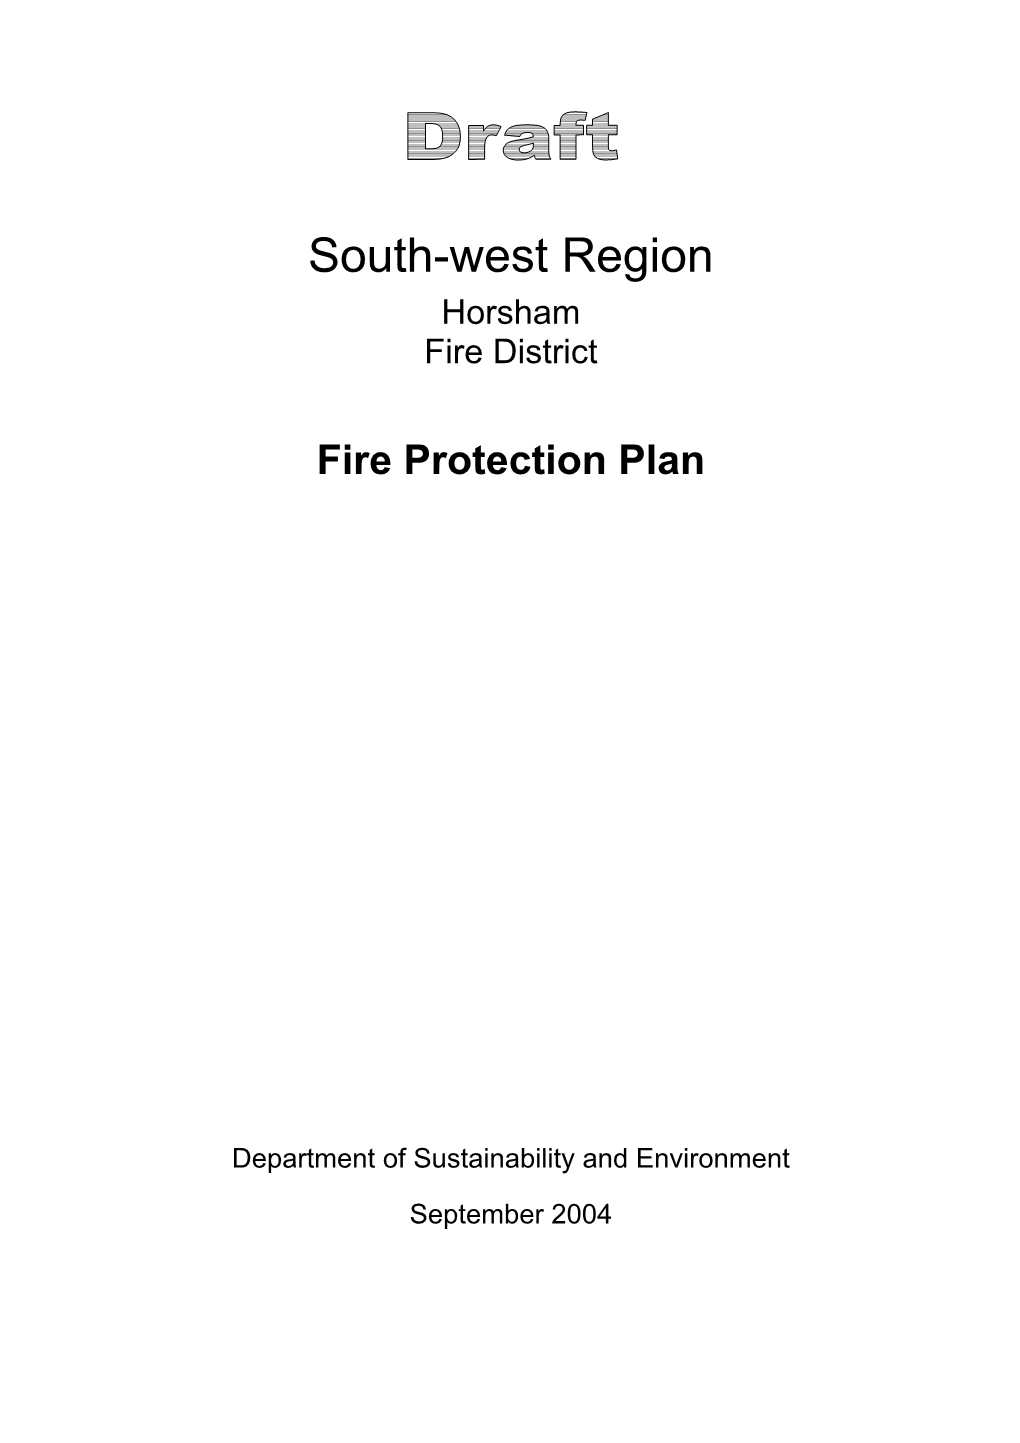 South-West Region Horsham Fire District